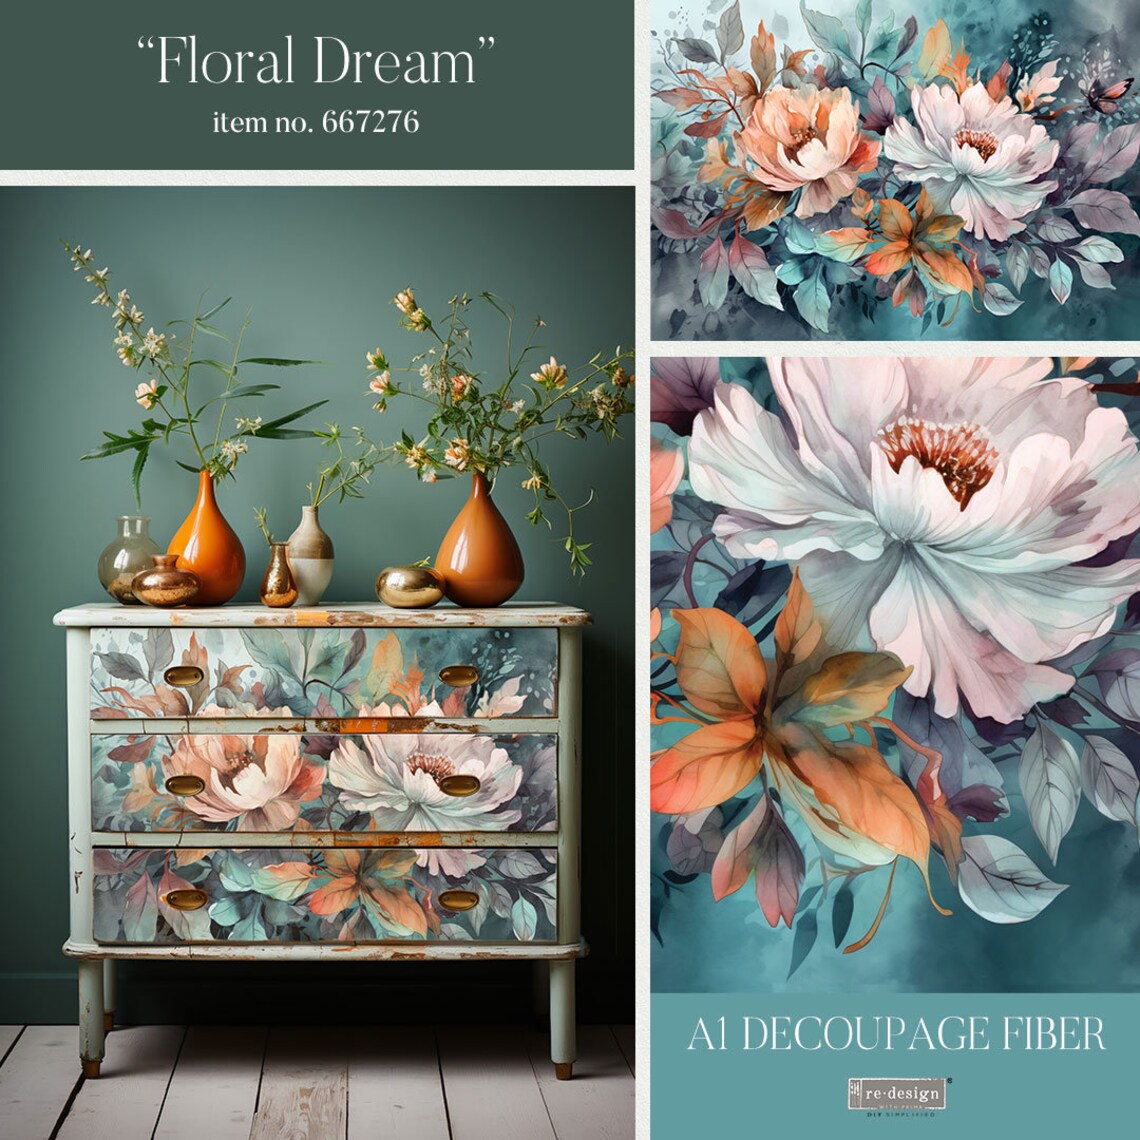 A1 Decoupage Fiber - Floral Dream - 1 sheet, A1 size